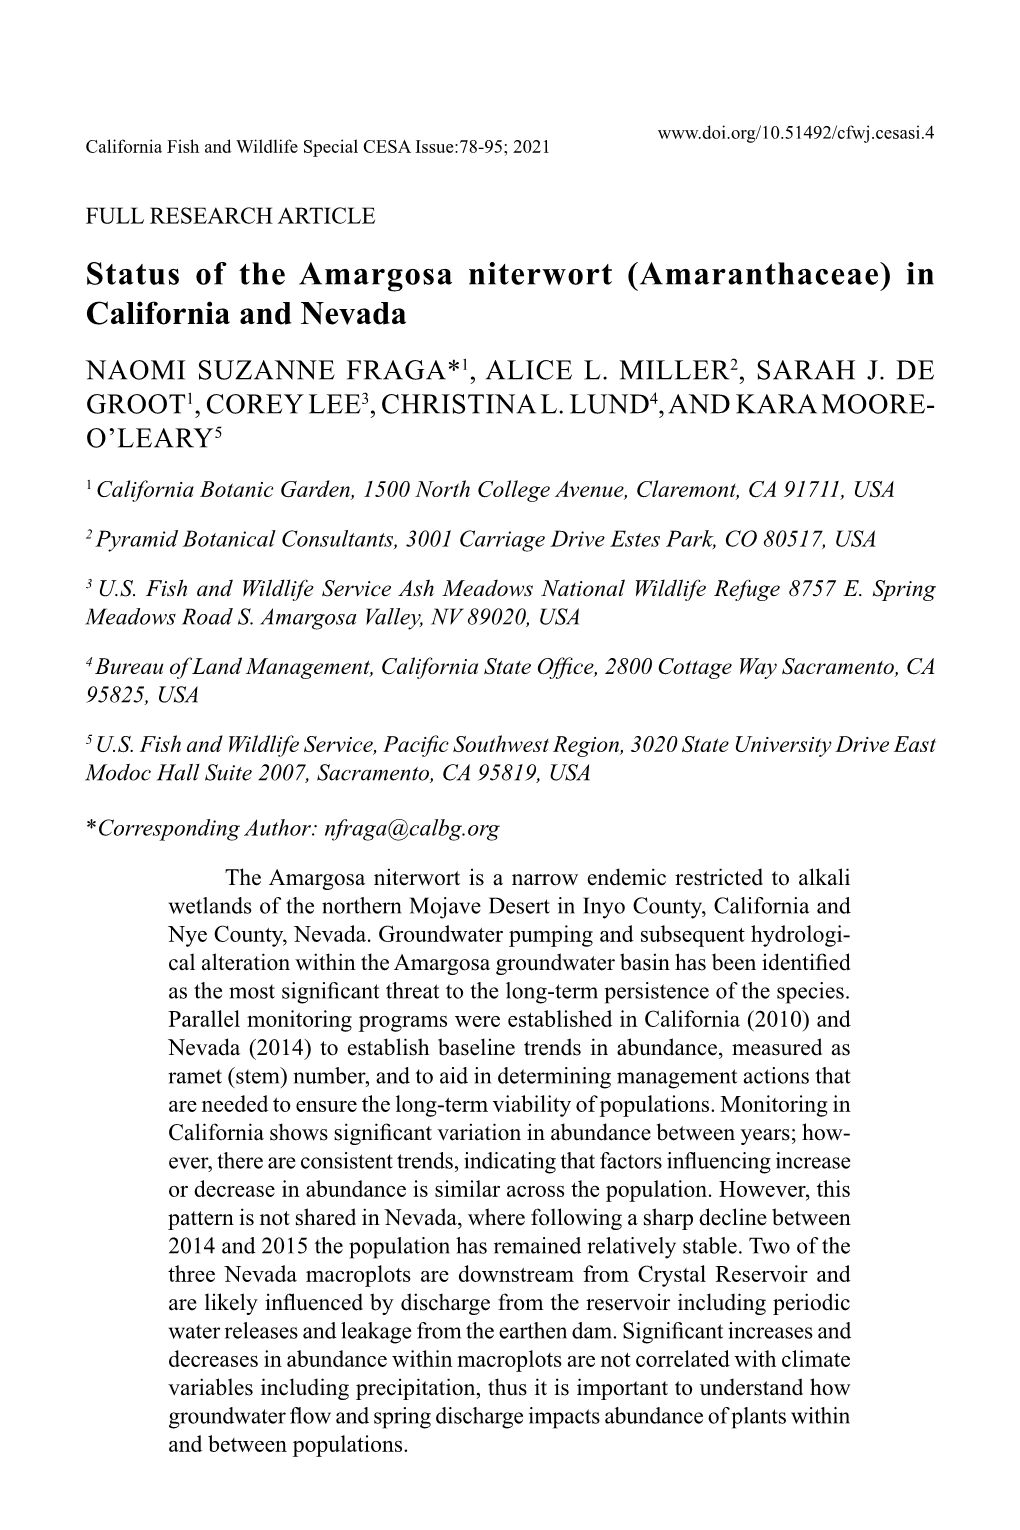 Status of the Amargosa Niterwort (Amaranthaceae) in California and Nevada NAOMI SUZANNE FRAGA*1, ALICE L